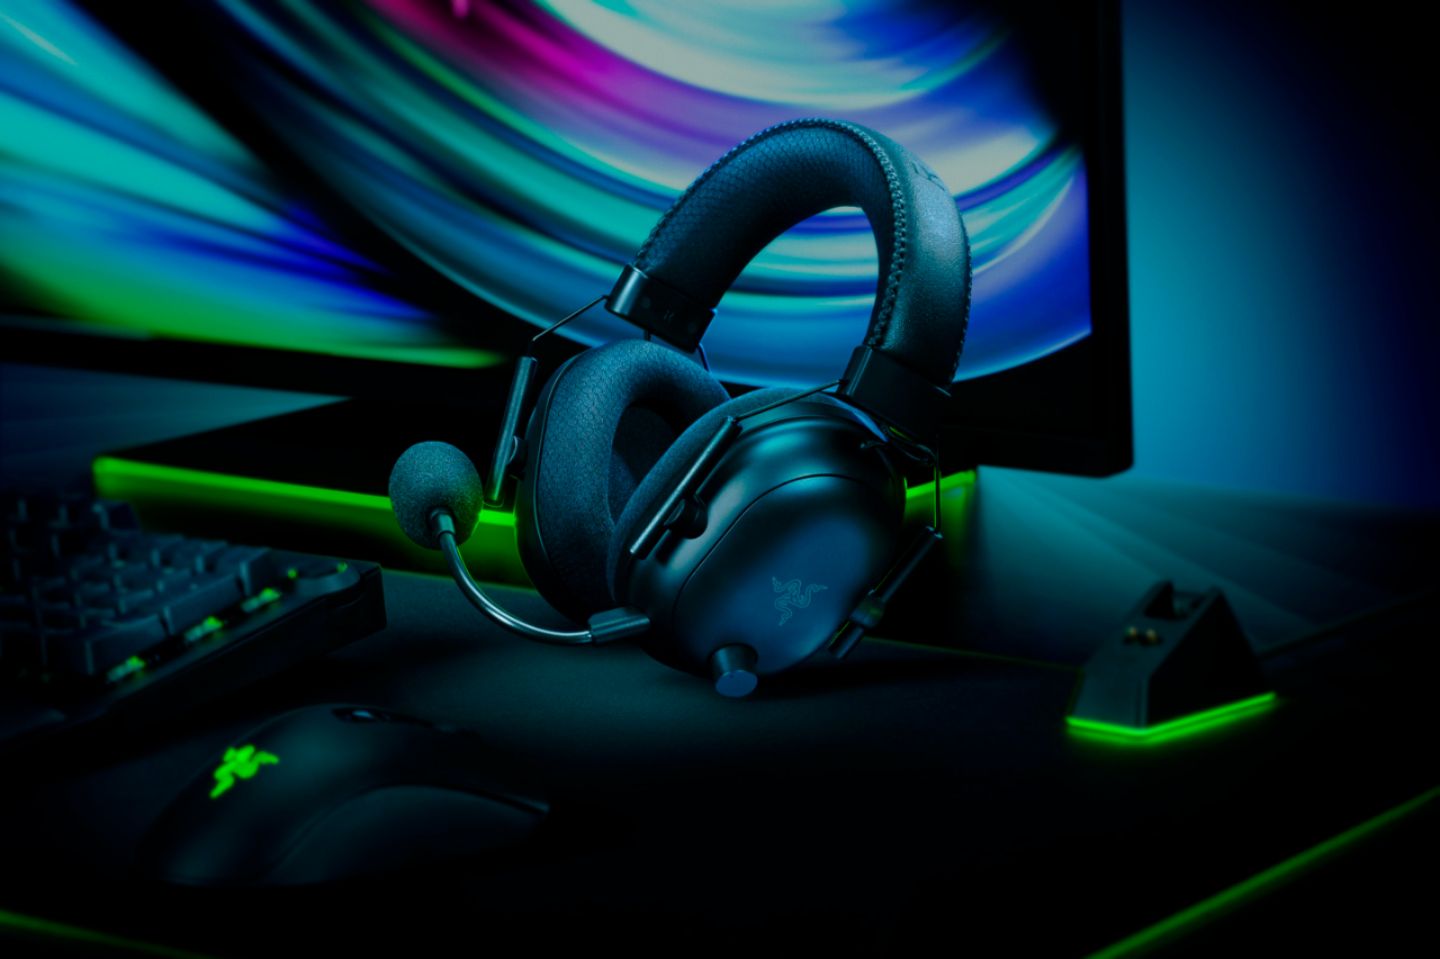 Razer BlackShark V2 Wired Gaming Headset | GameStop